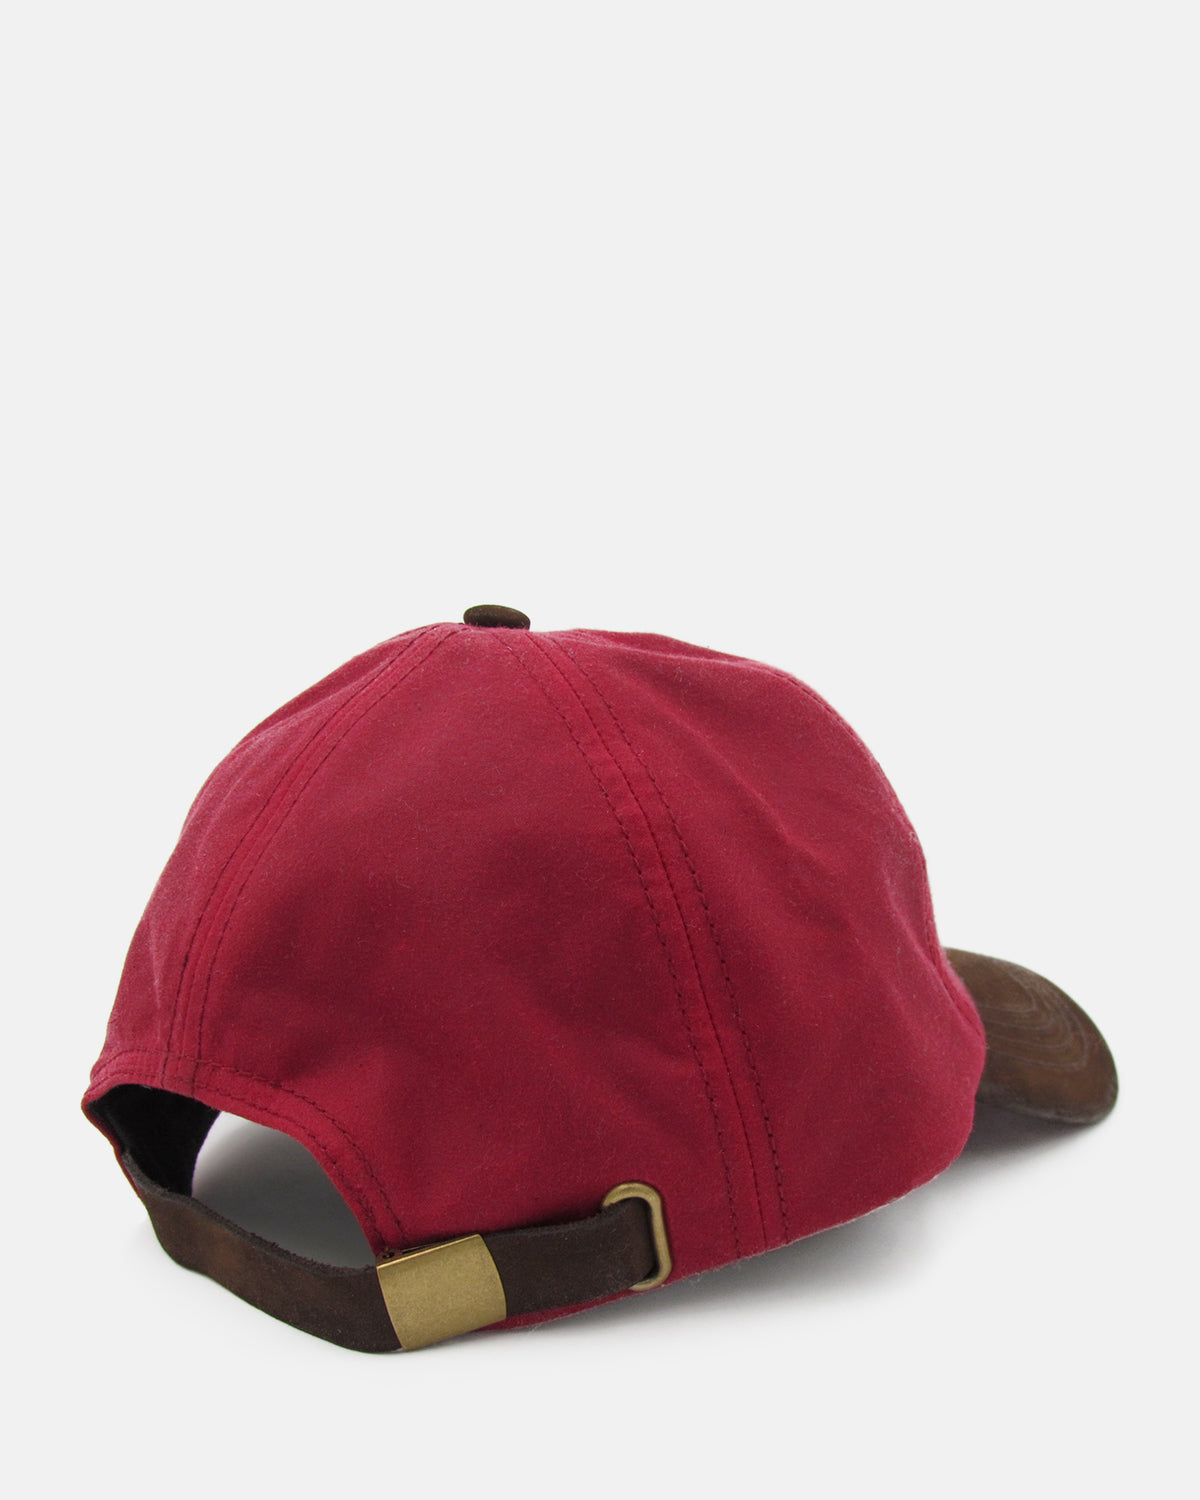 Wax Baseball Cap - Red